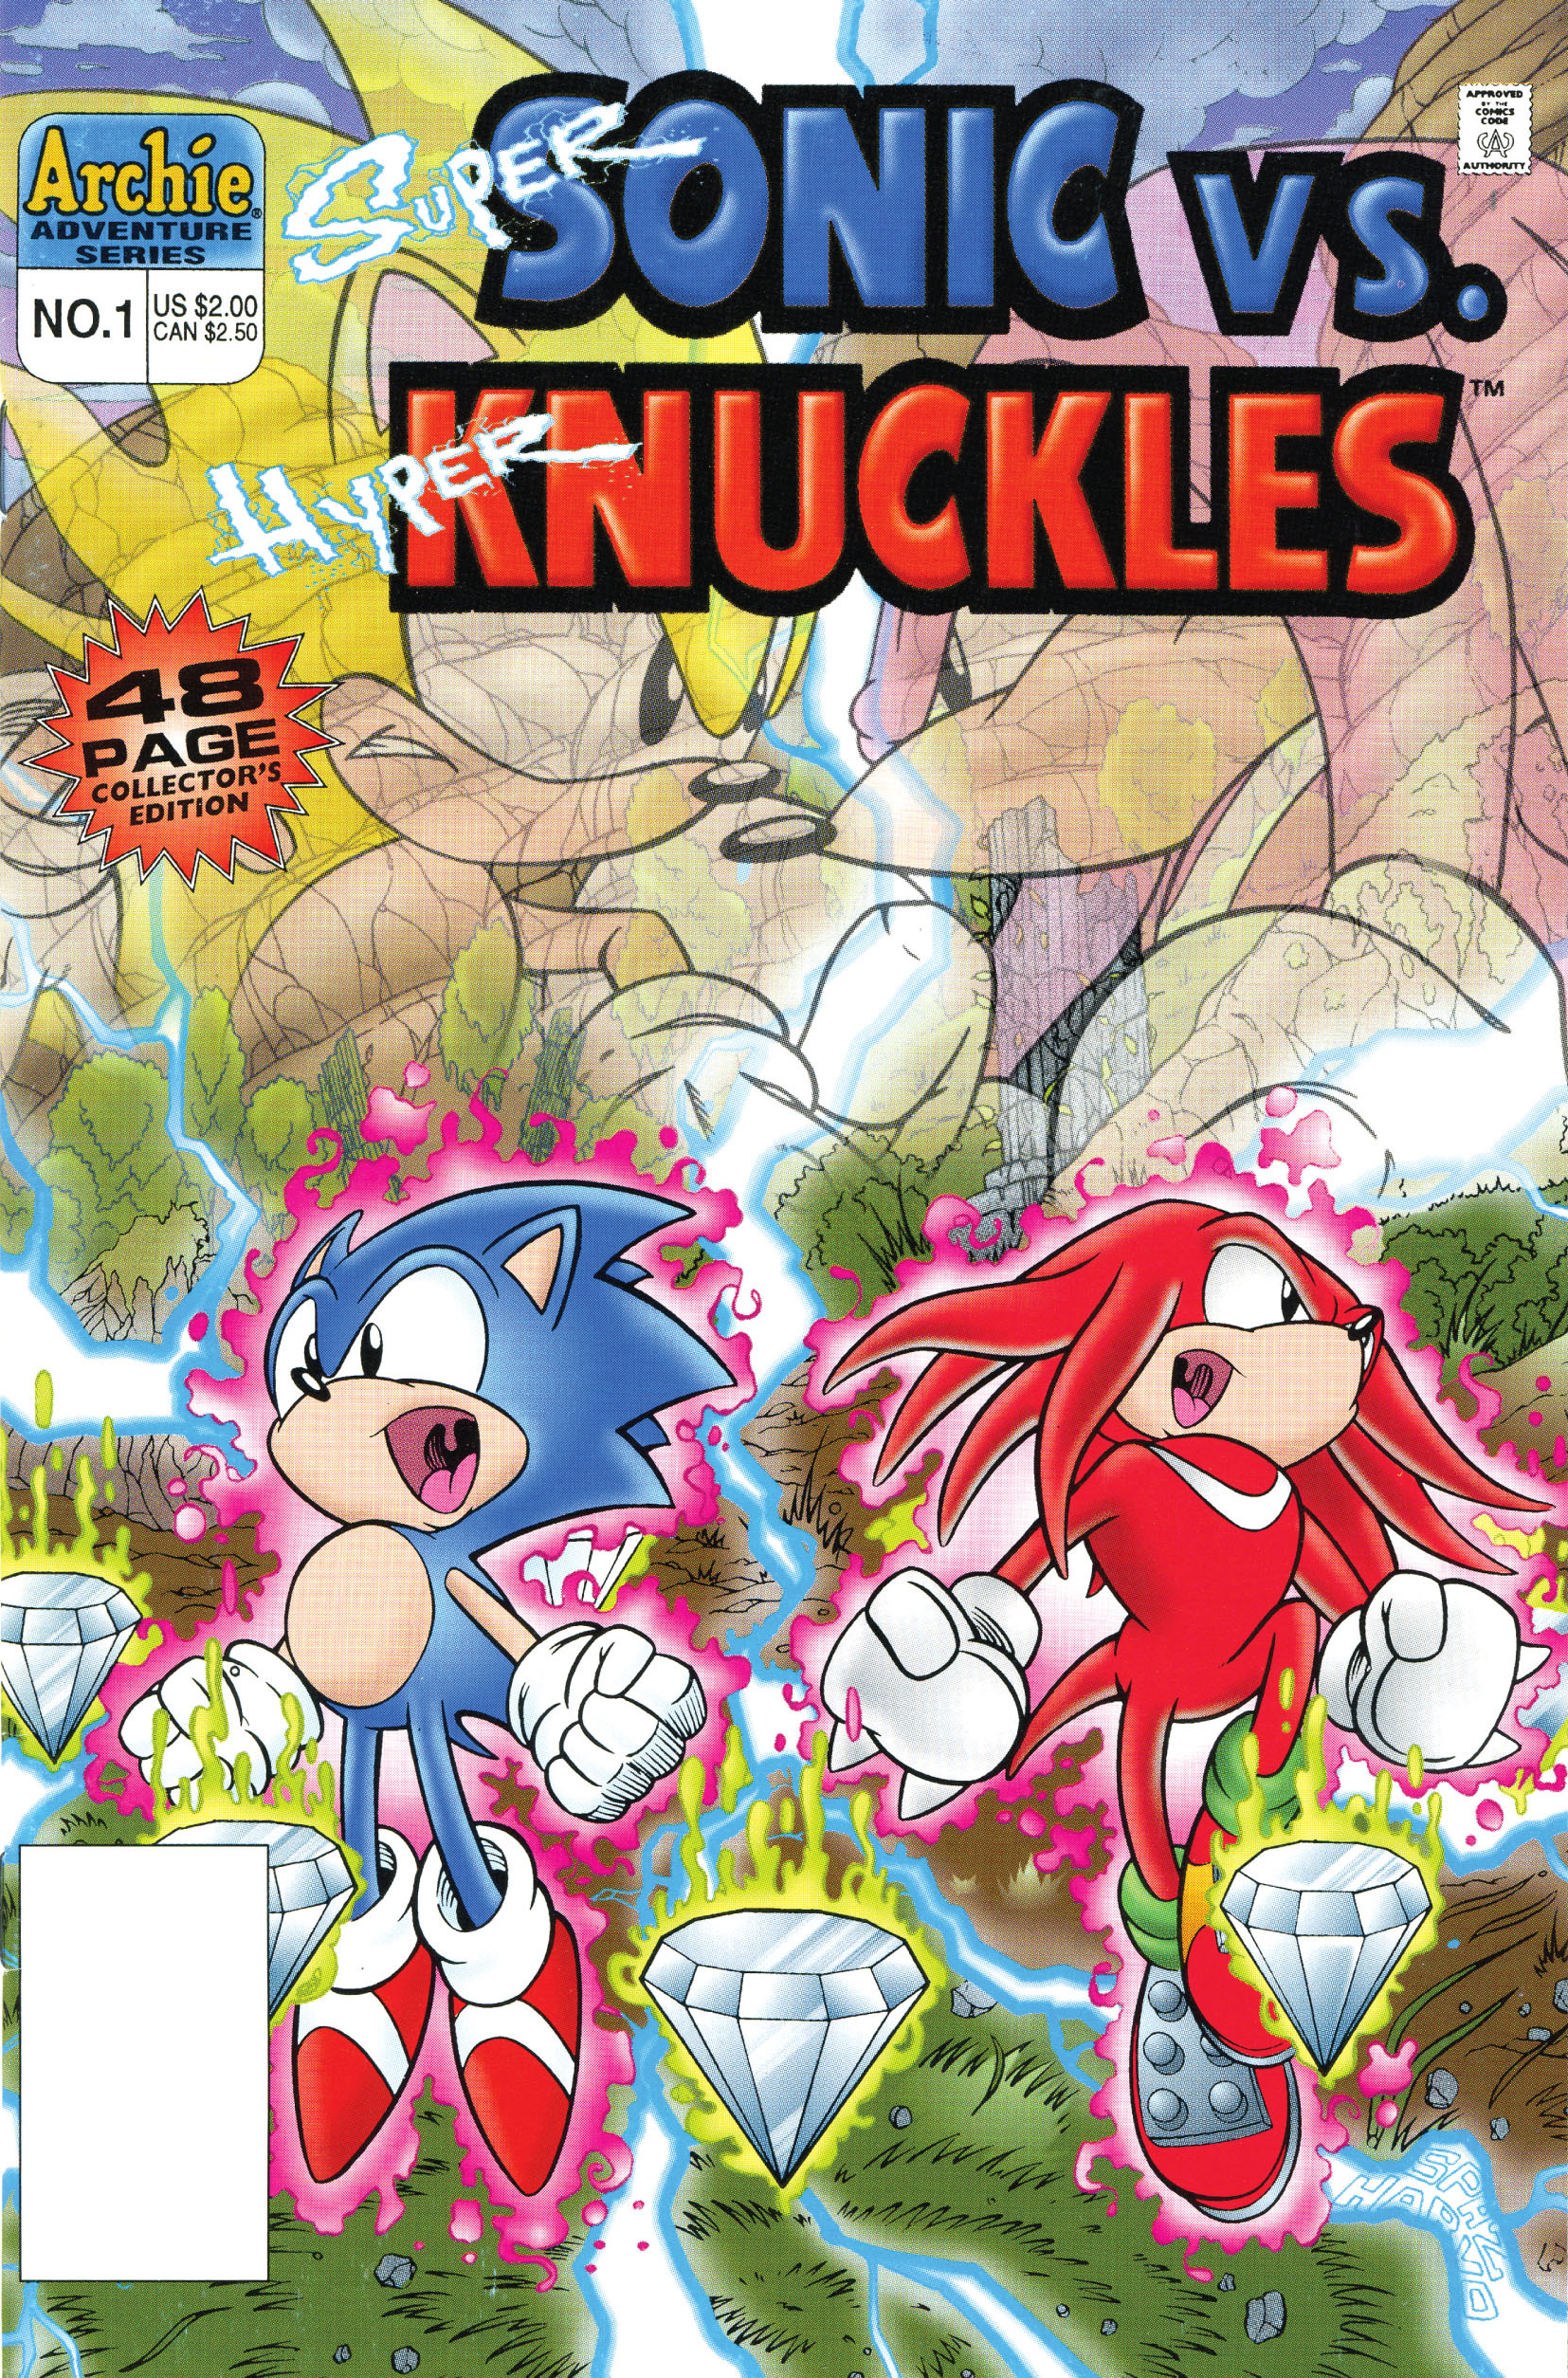 Super Sonic vs. Hyper Knuckles #1, First Print, VF